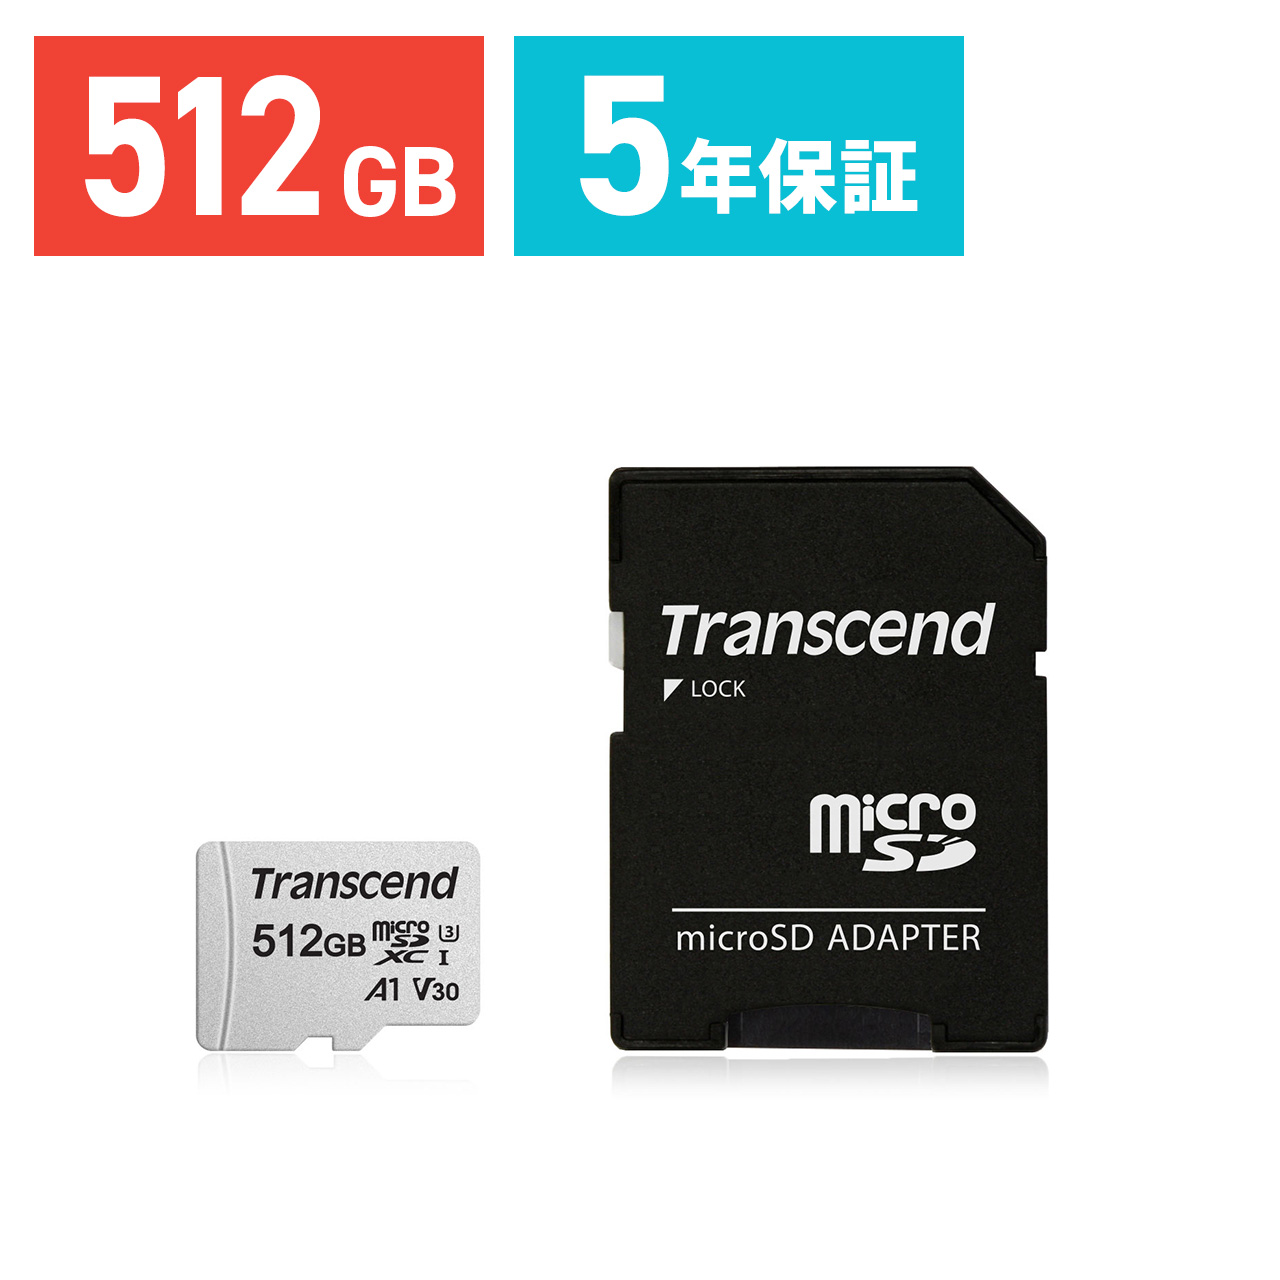 microSDXCカード 512GB Class10 UHS-I U3 U1 V30 A1 SD変換アダプタ付き Nintendo Switch ROG Ally 対応 Transcend製 TS512GUSD300S-A